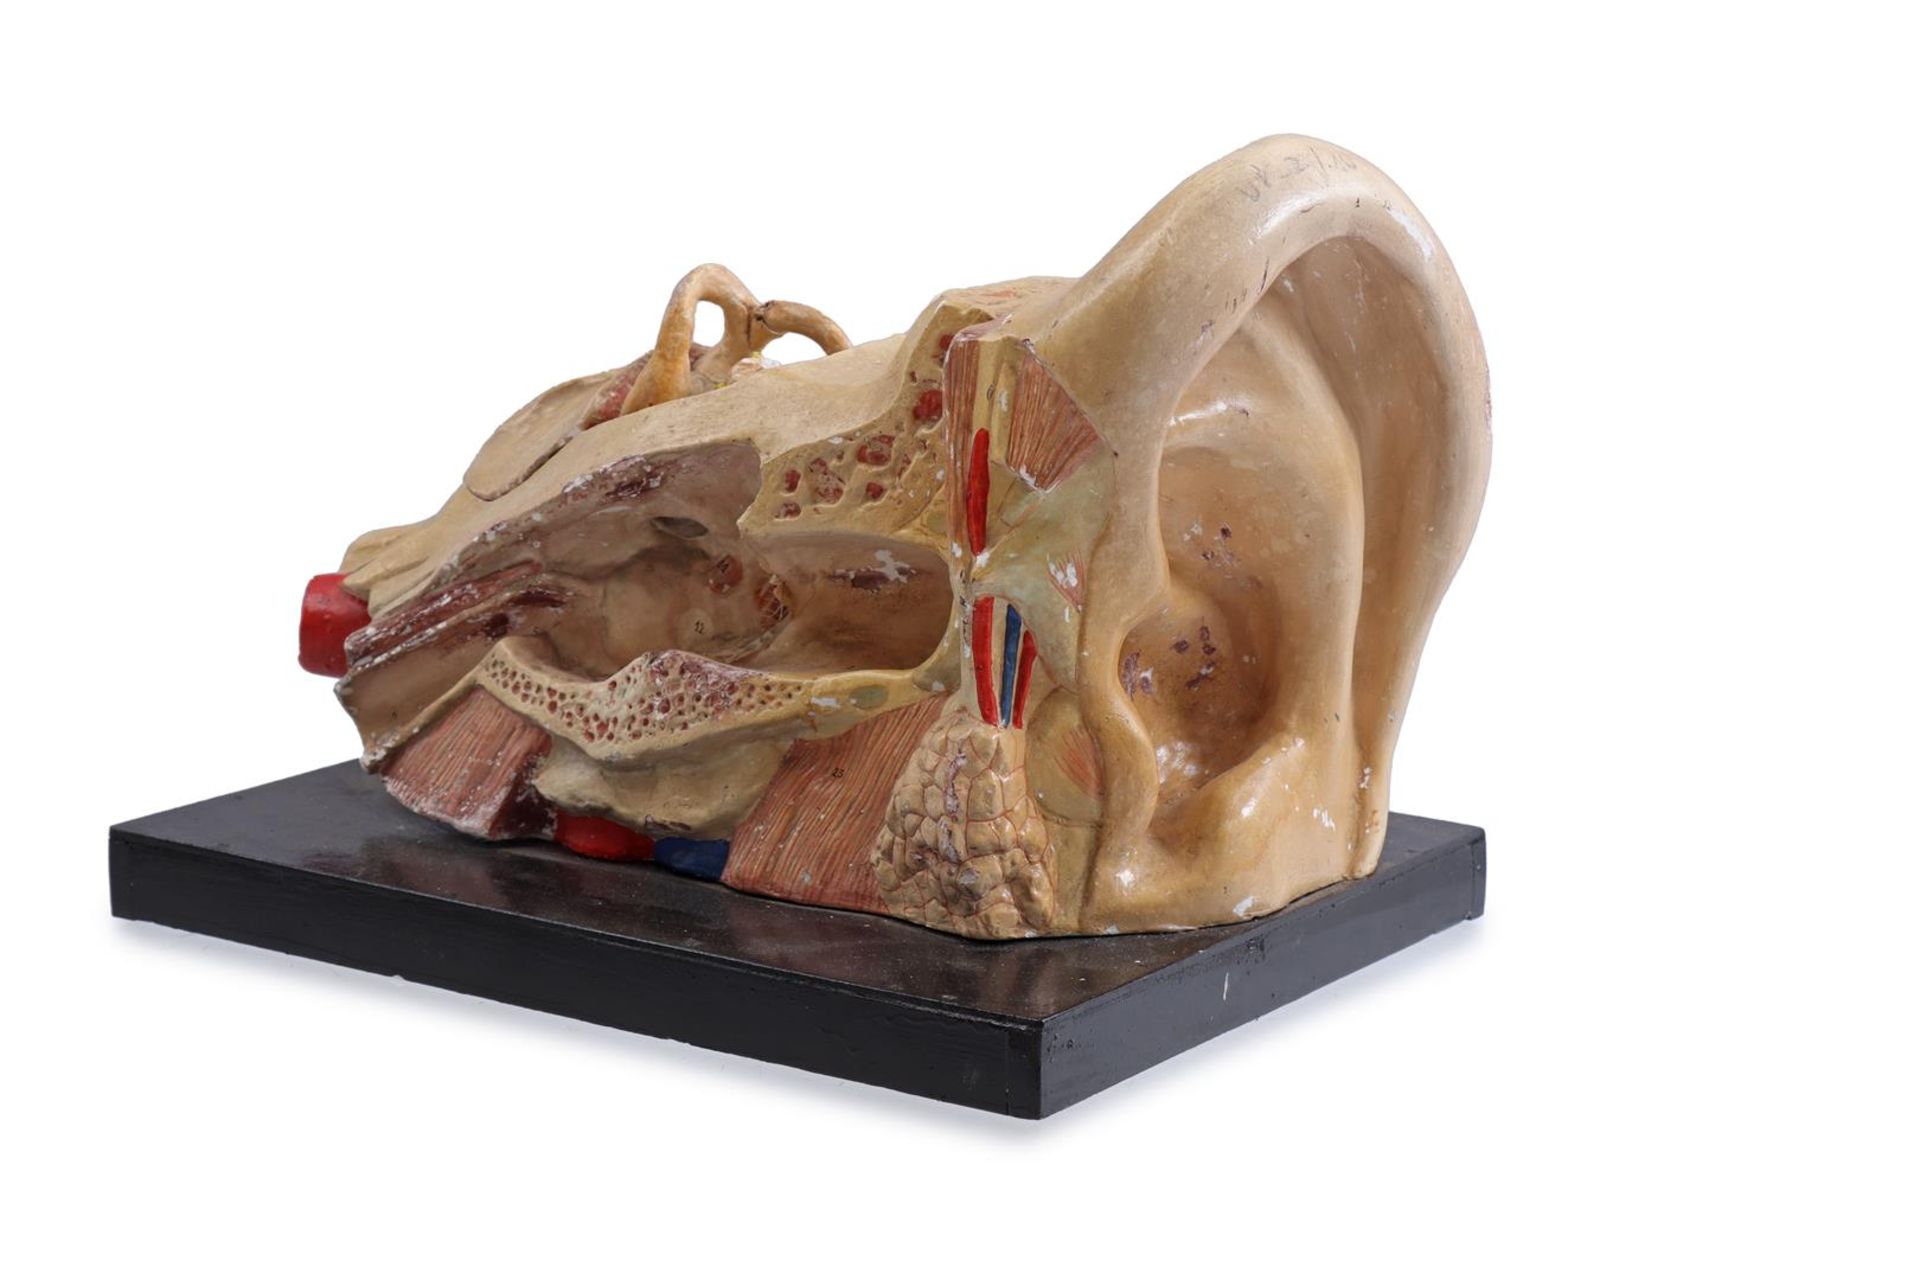 Plaster anatomical model of an ear